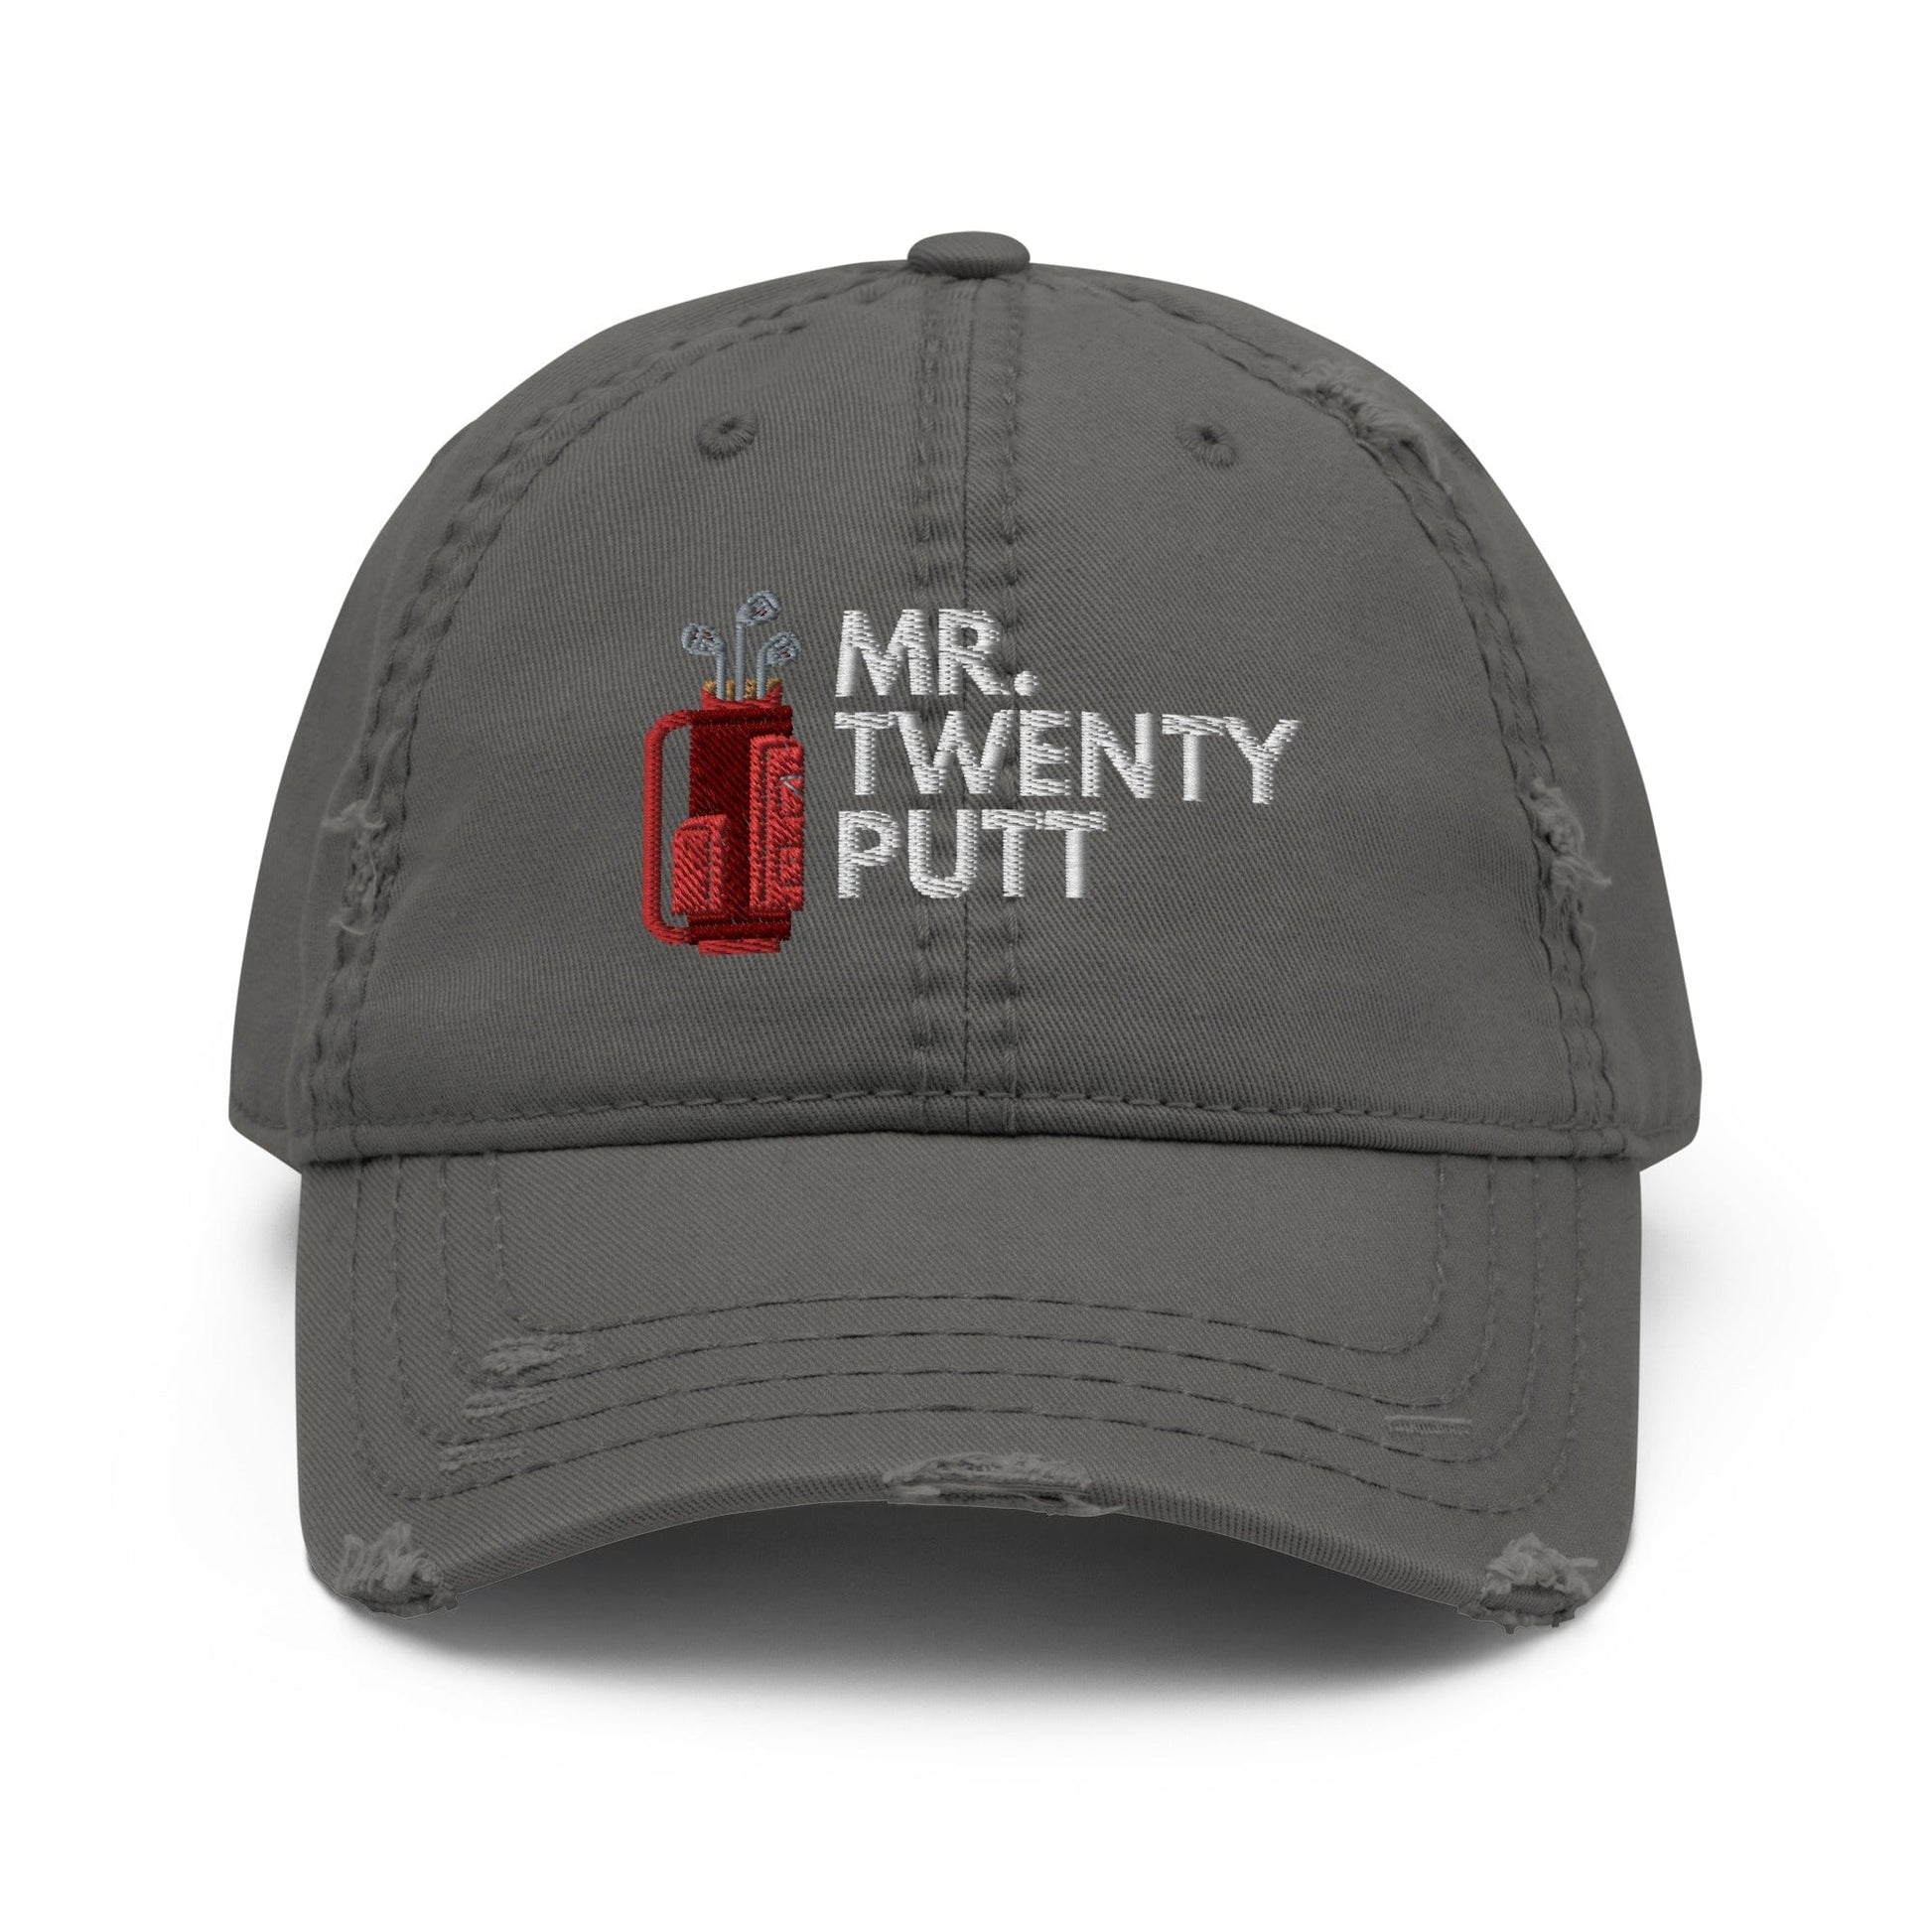 Funny Golfer Gifts  Distressed Cap Charcoal Grey Mr. Twenty Putt Distressed Hat